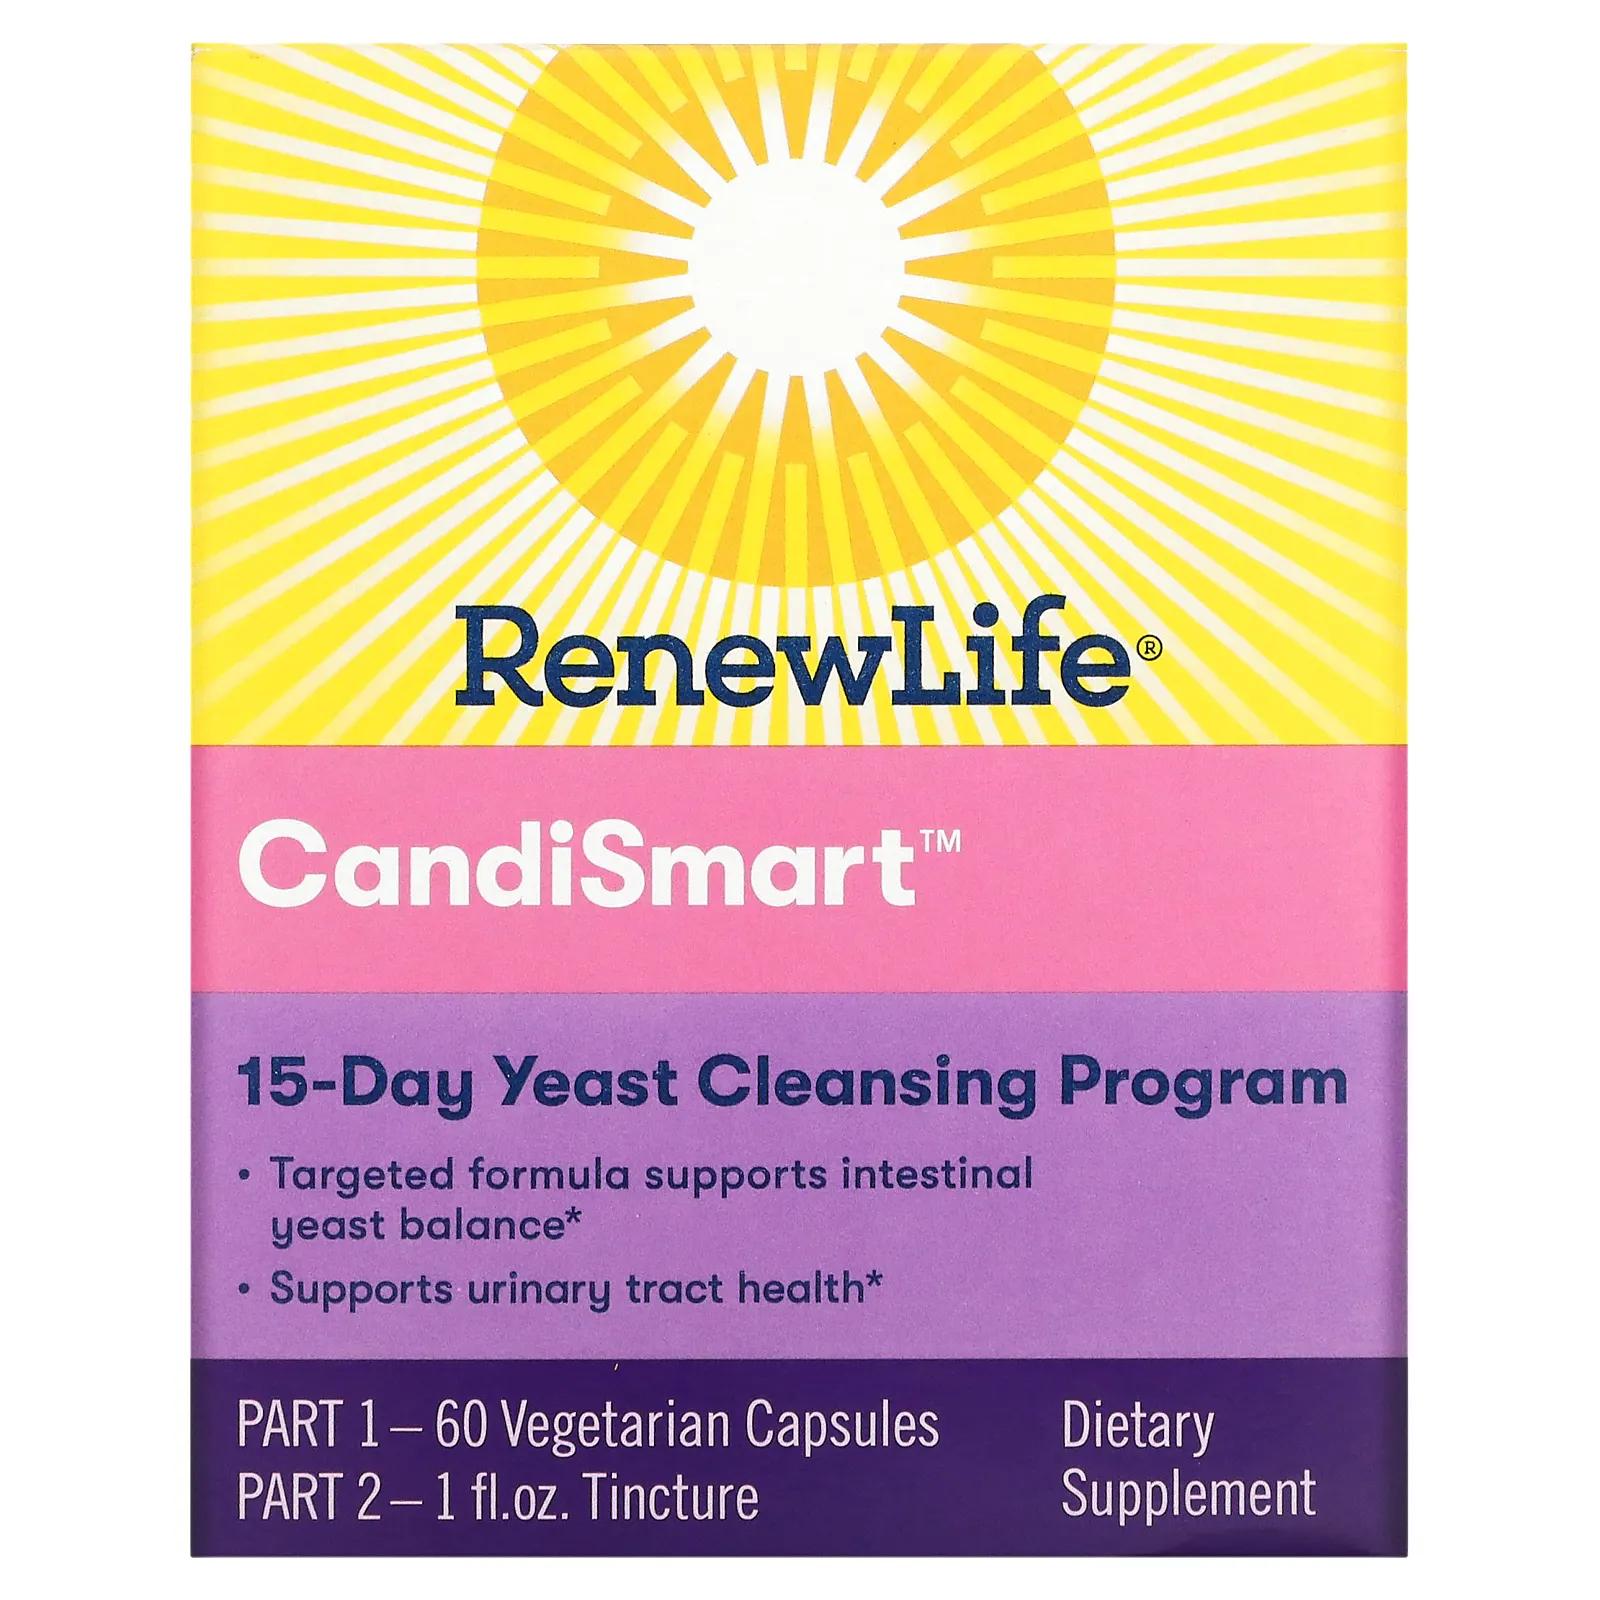 Renew Life Целевая Candi Smart очищающая дрожжевая формула 15-дневная программа 2-компонентная программа life extension geroprotect autophagy renew 30